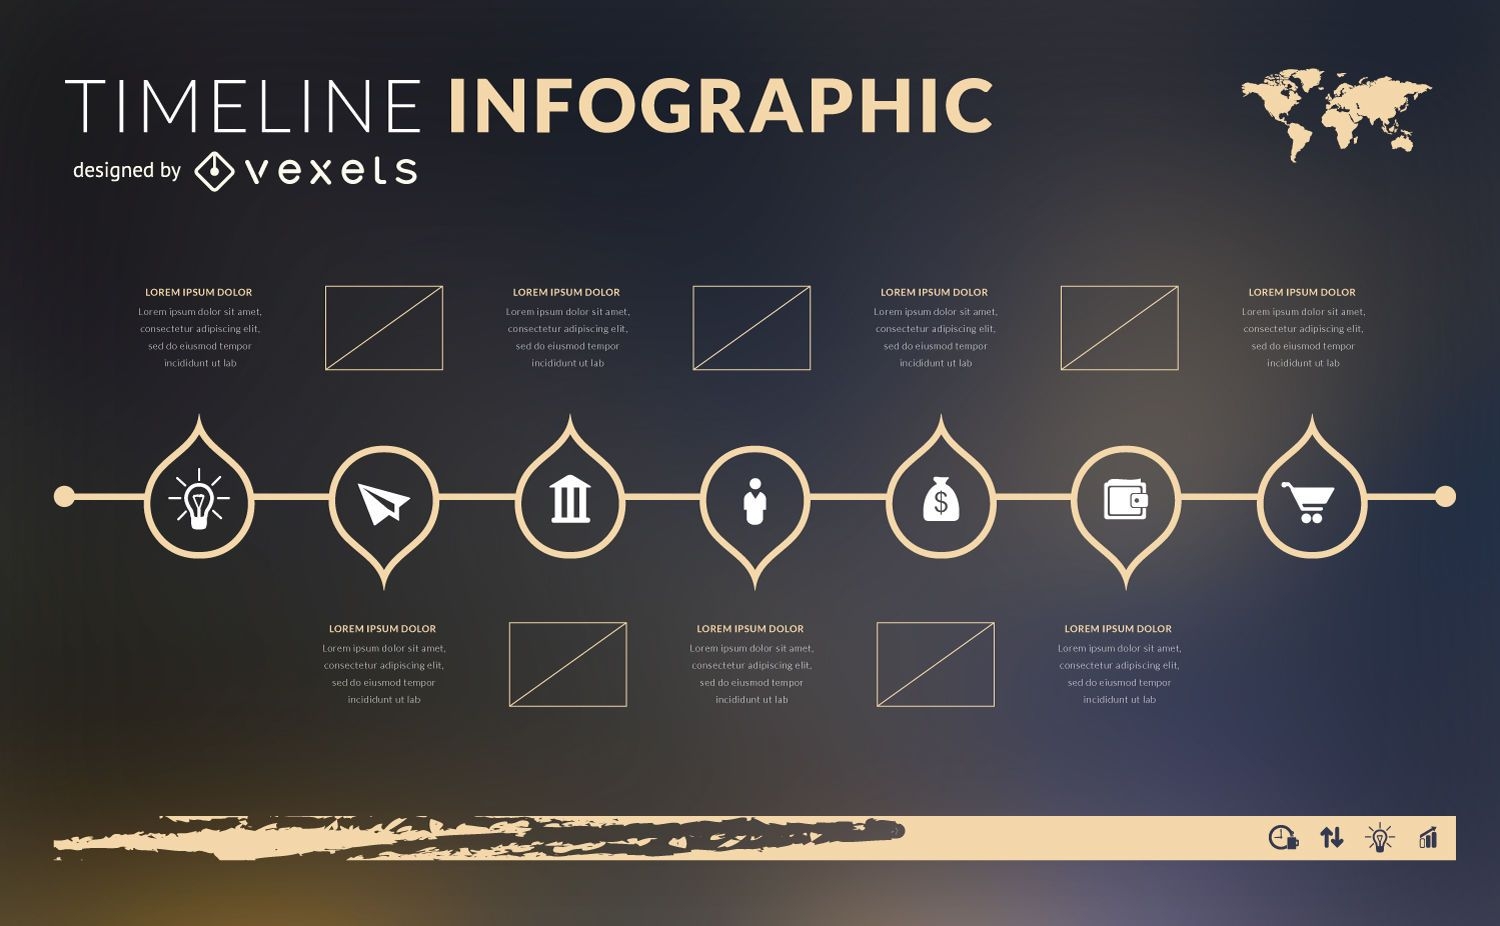 Flat design timeline infographic template